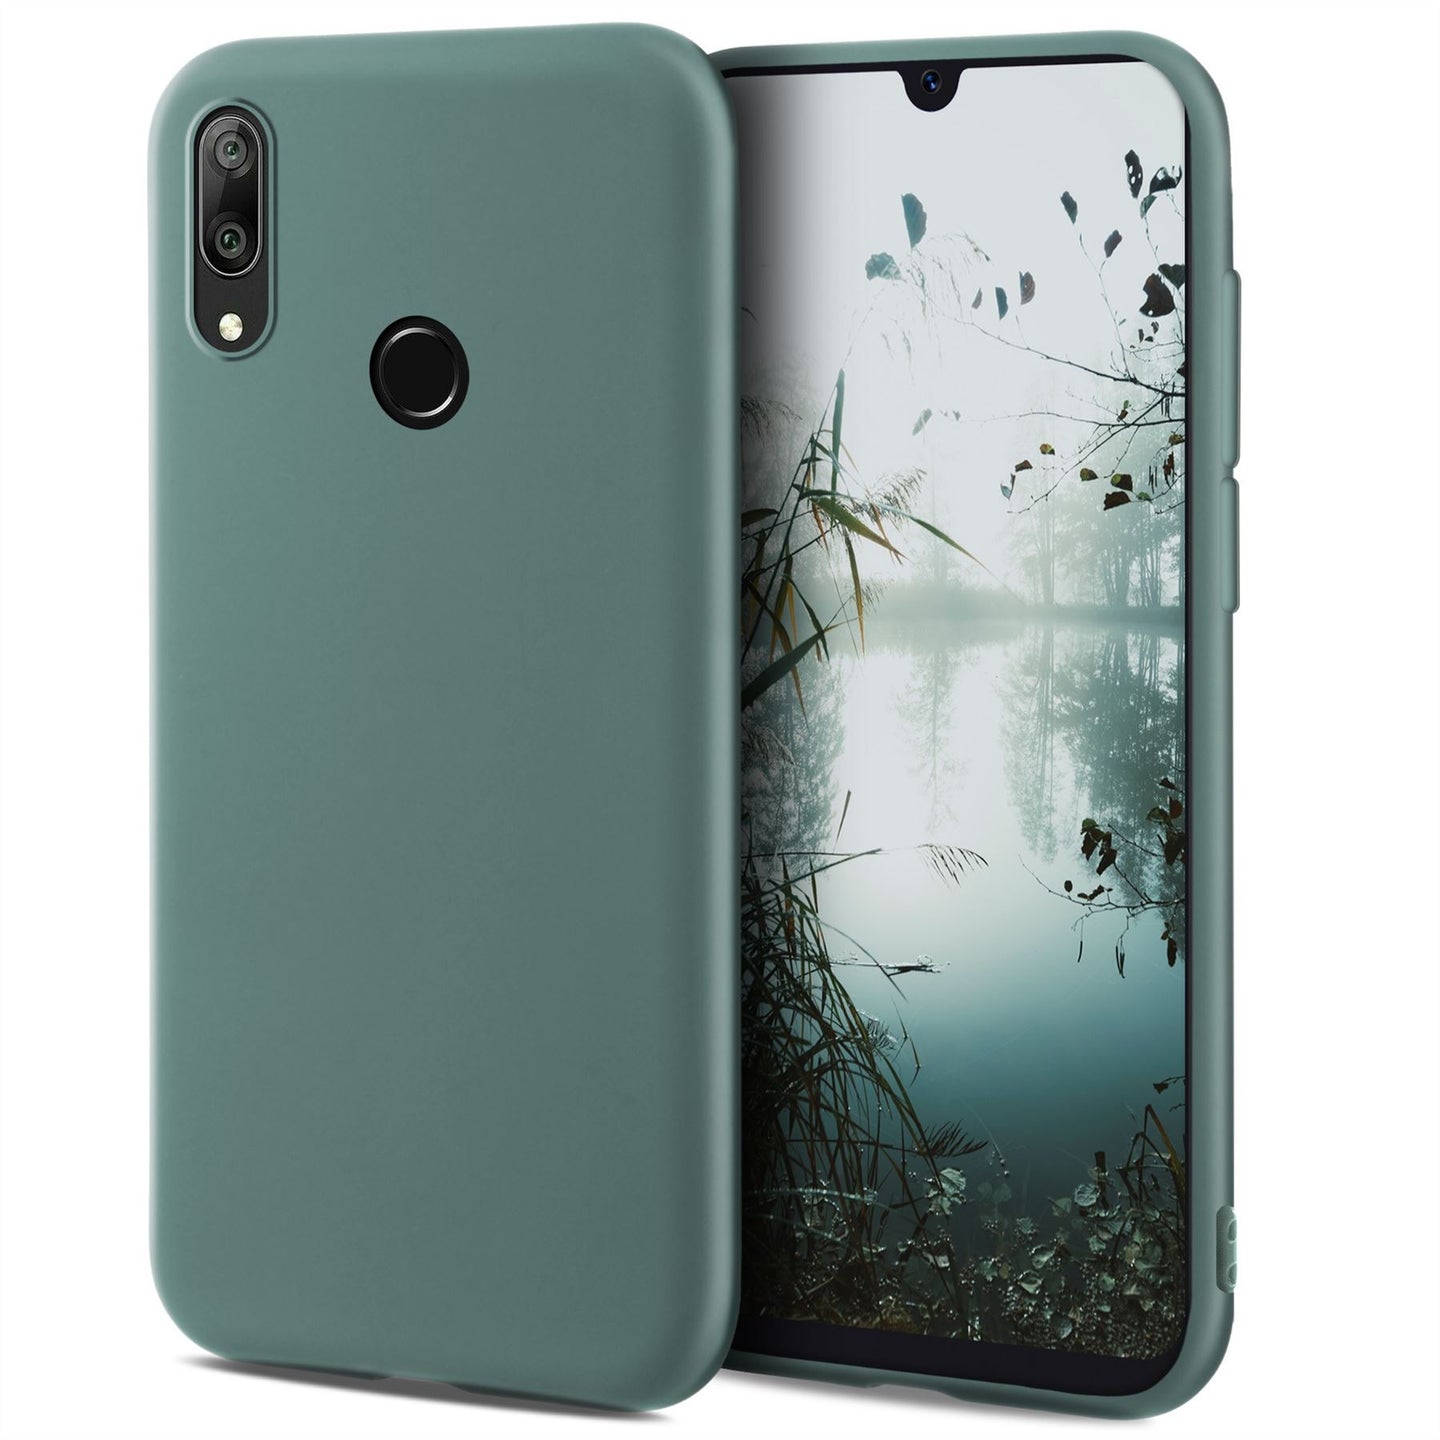 Moozy Minimalist Series Silicone Case for Huawei Y7 2019, Blue Grey - Matte Finish Slim Soft TPU Cover